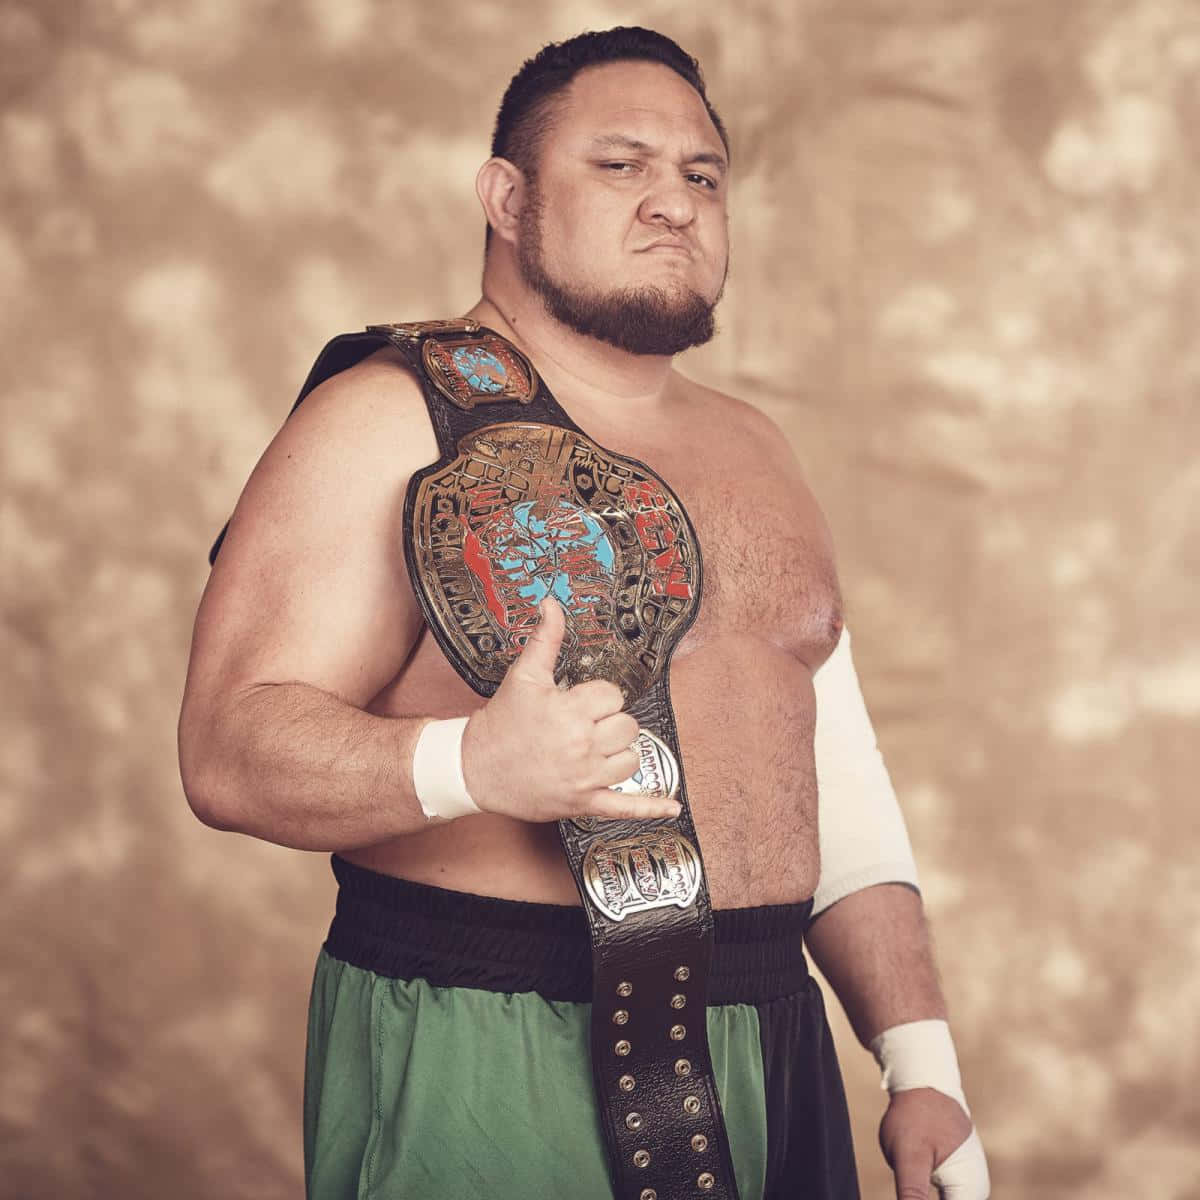 Samoa Joe Classic Ecw Title Championship Belt Background